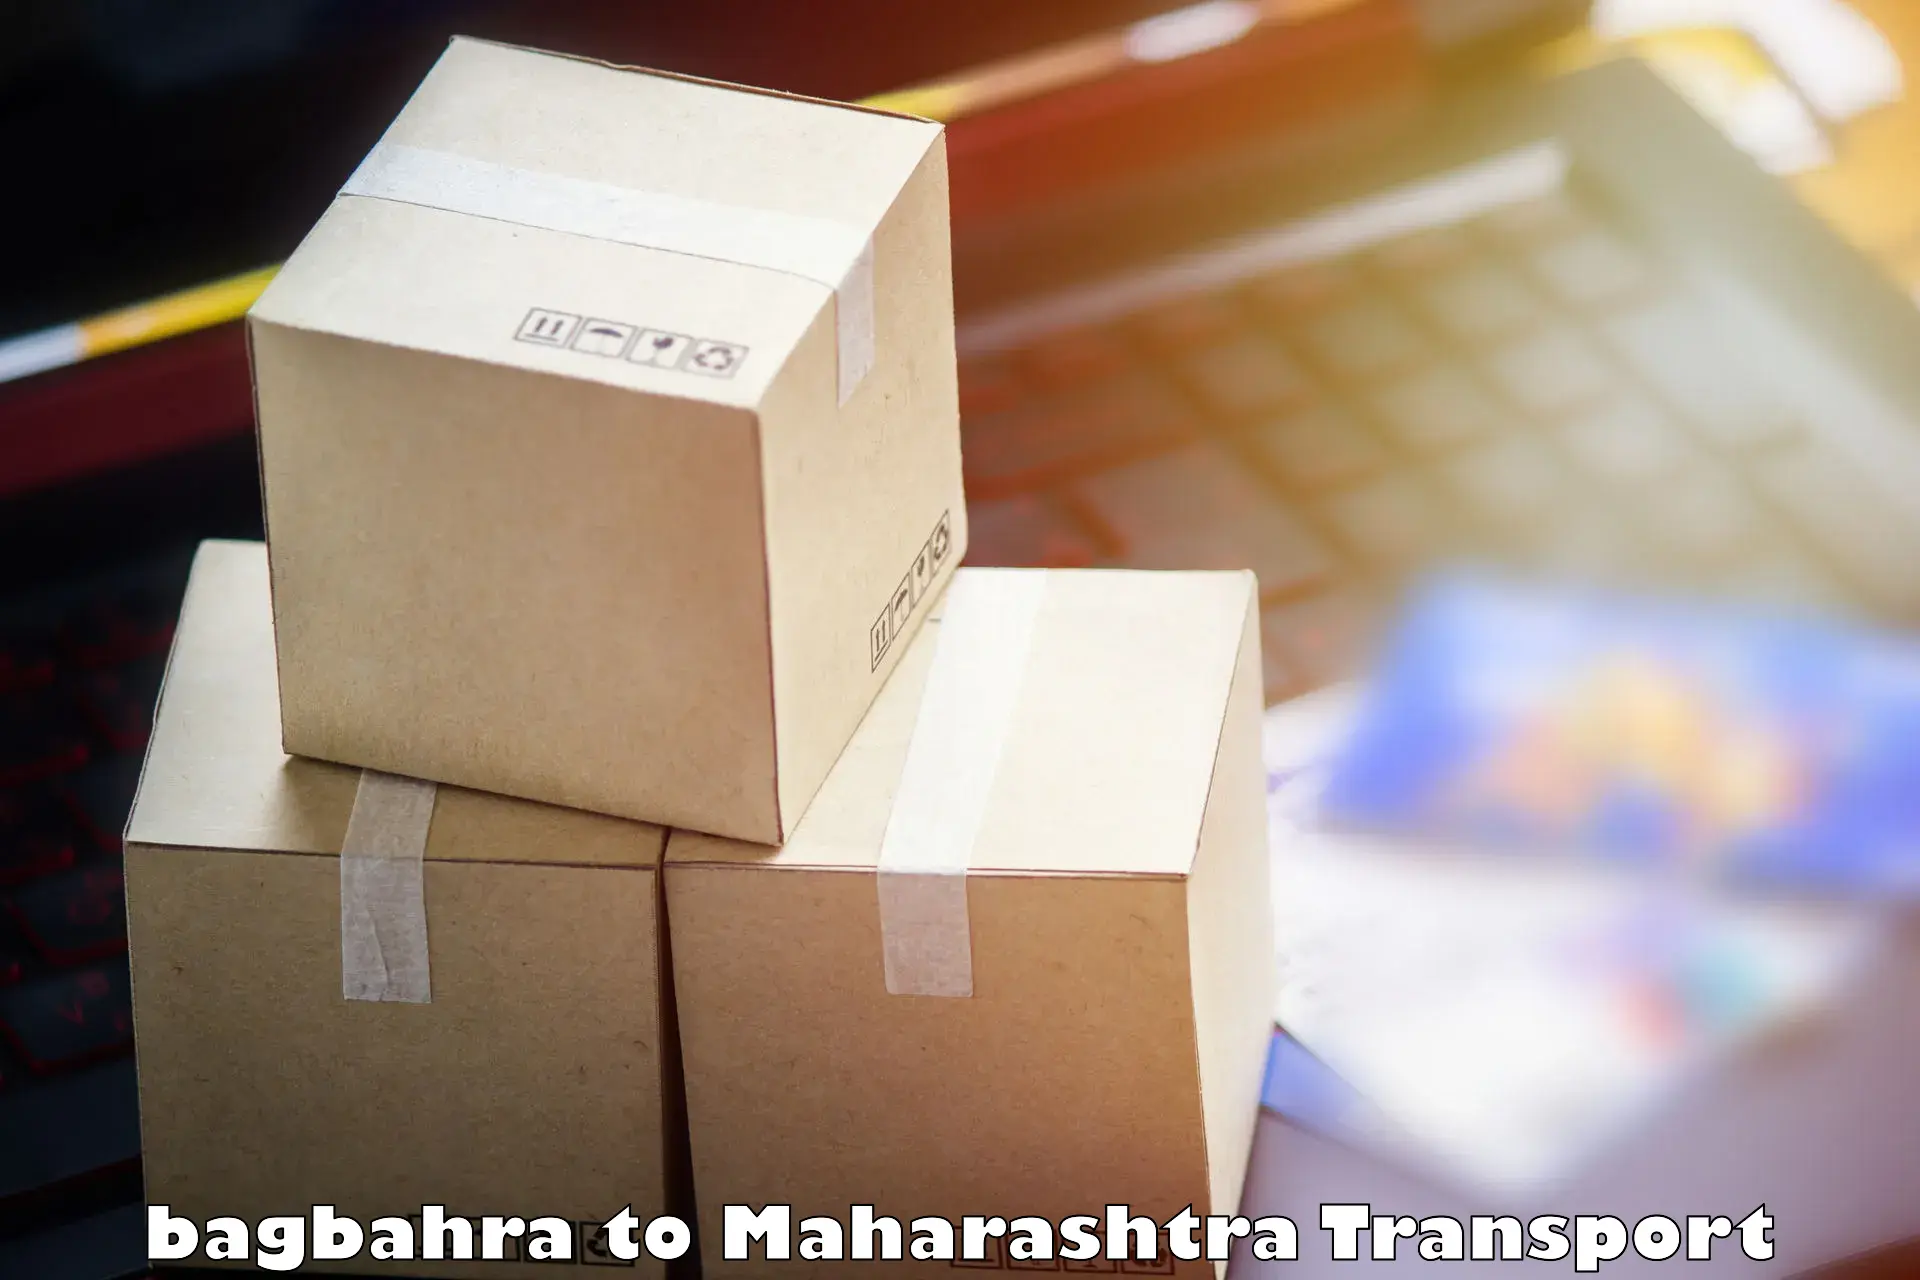 Online transport service bagbahra to Shirdi